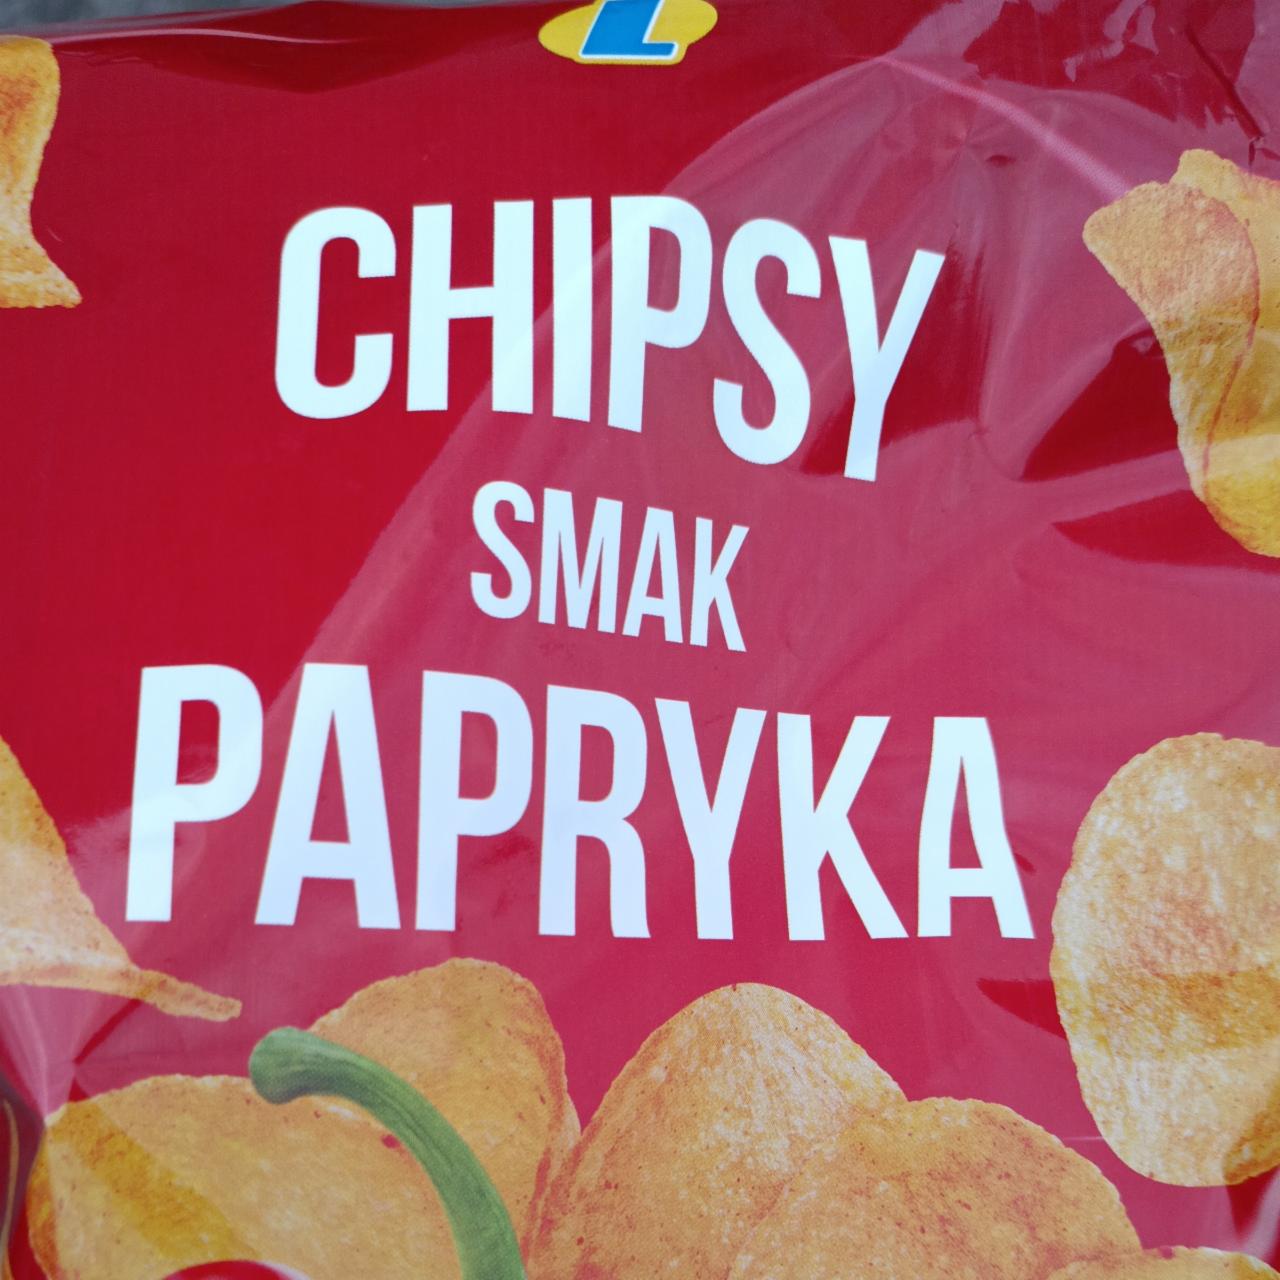 Zdjęcia - chipsy smak papryka lewiatan